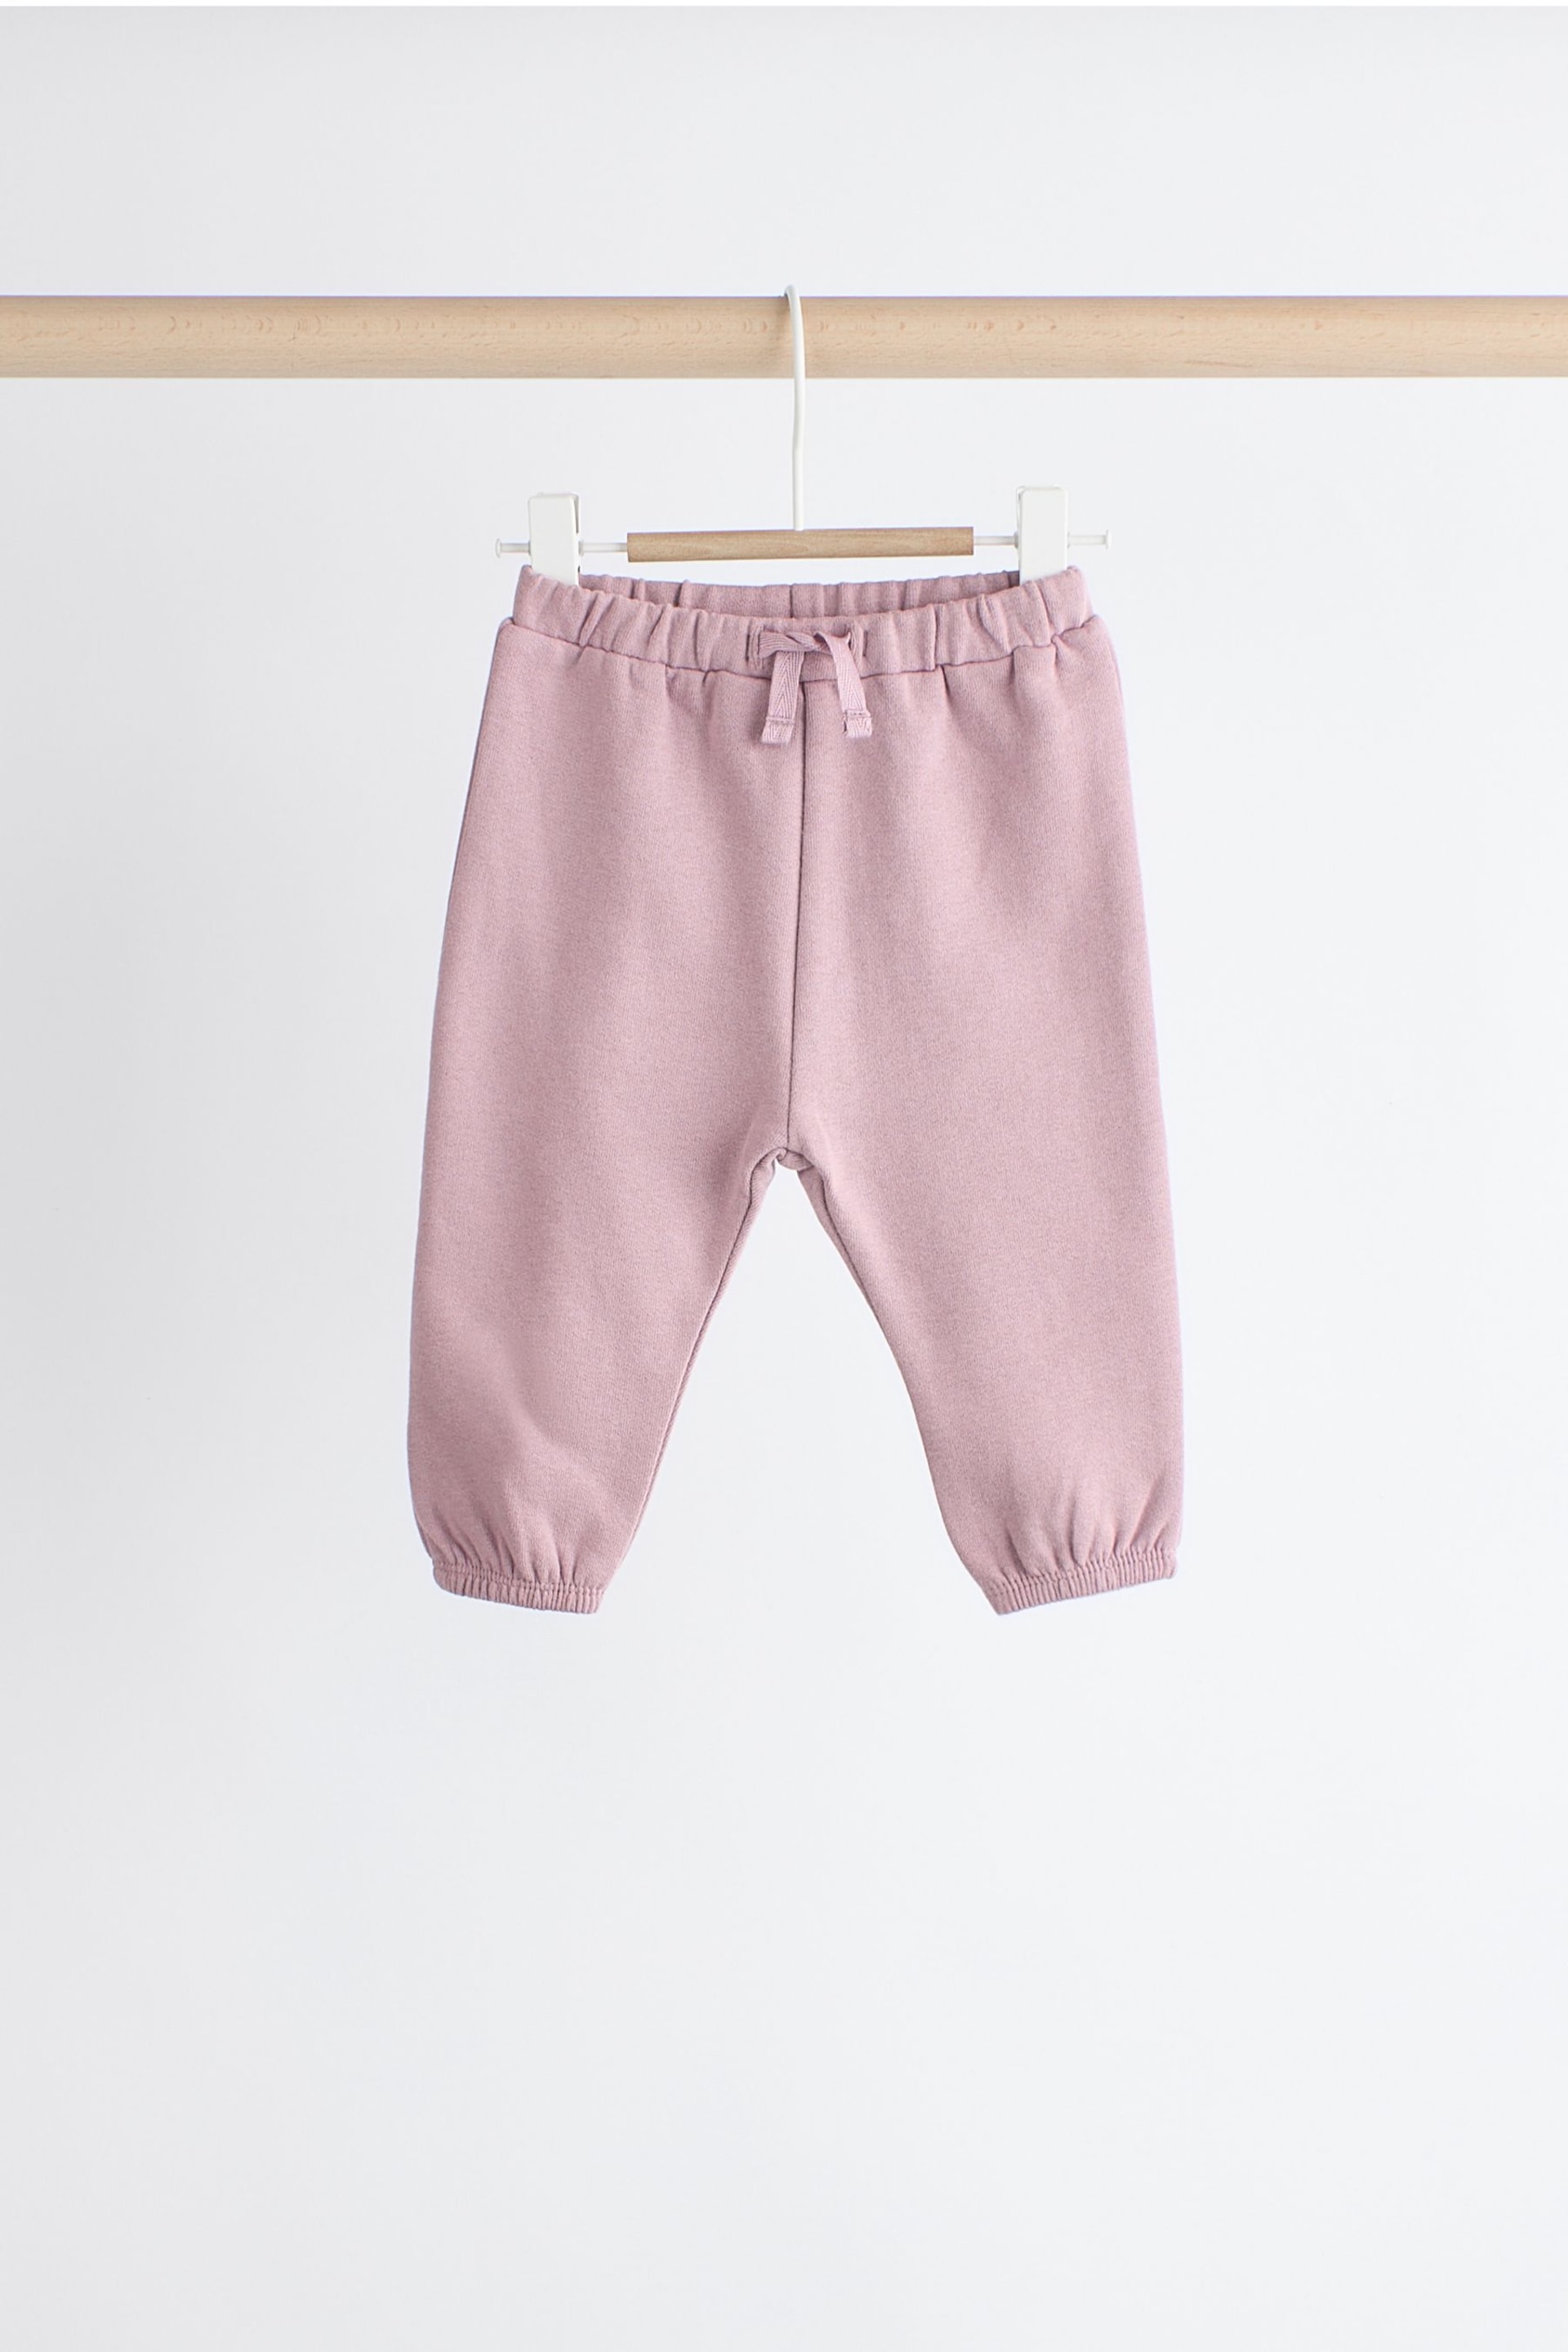 Pink/Cream Baby Sweatshirt & Joggers Set 6 Pack - Image 10 of 15